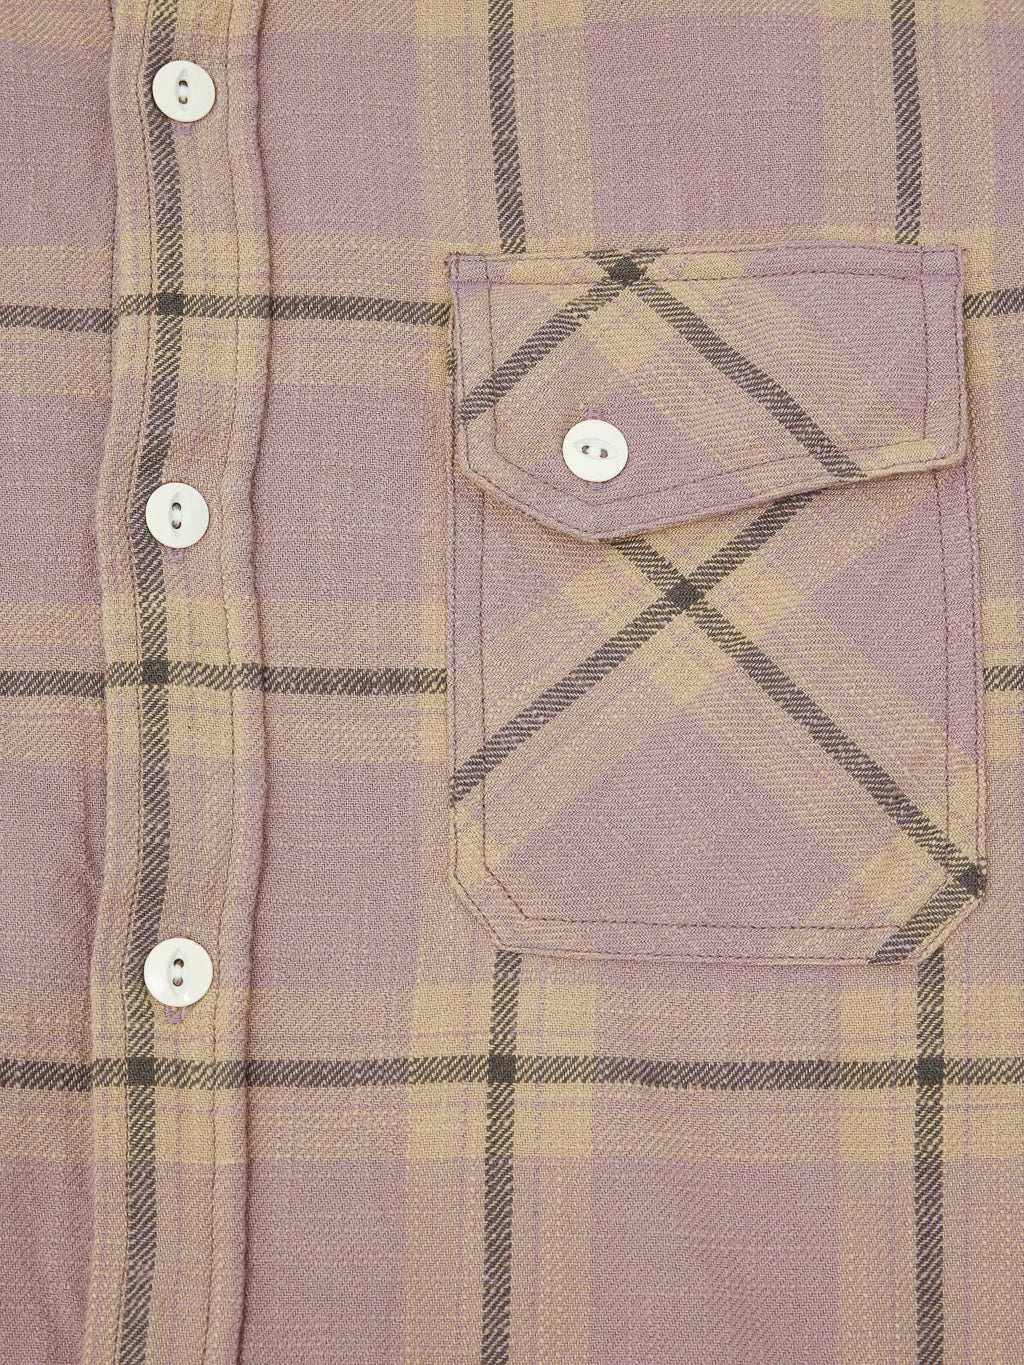 3sixteen Crosscut Flannel Mauve Slub Check shirt pocket closeup